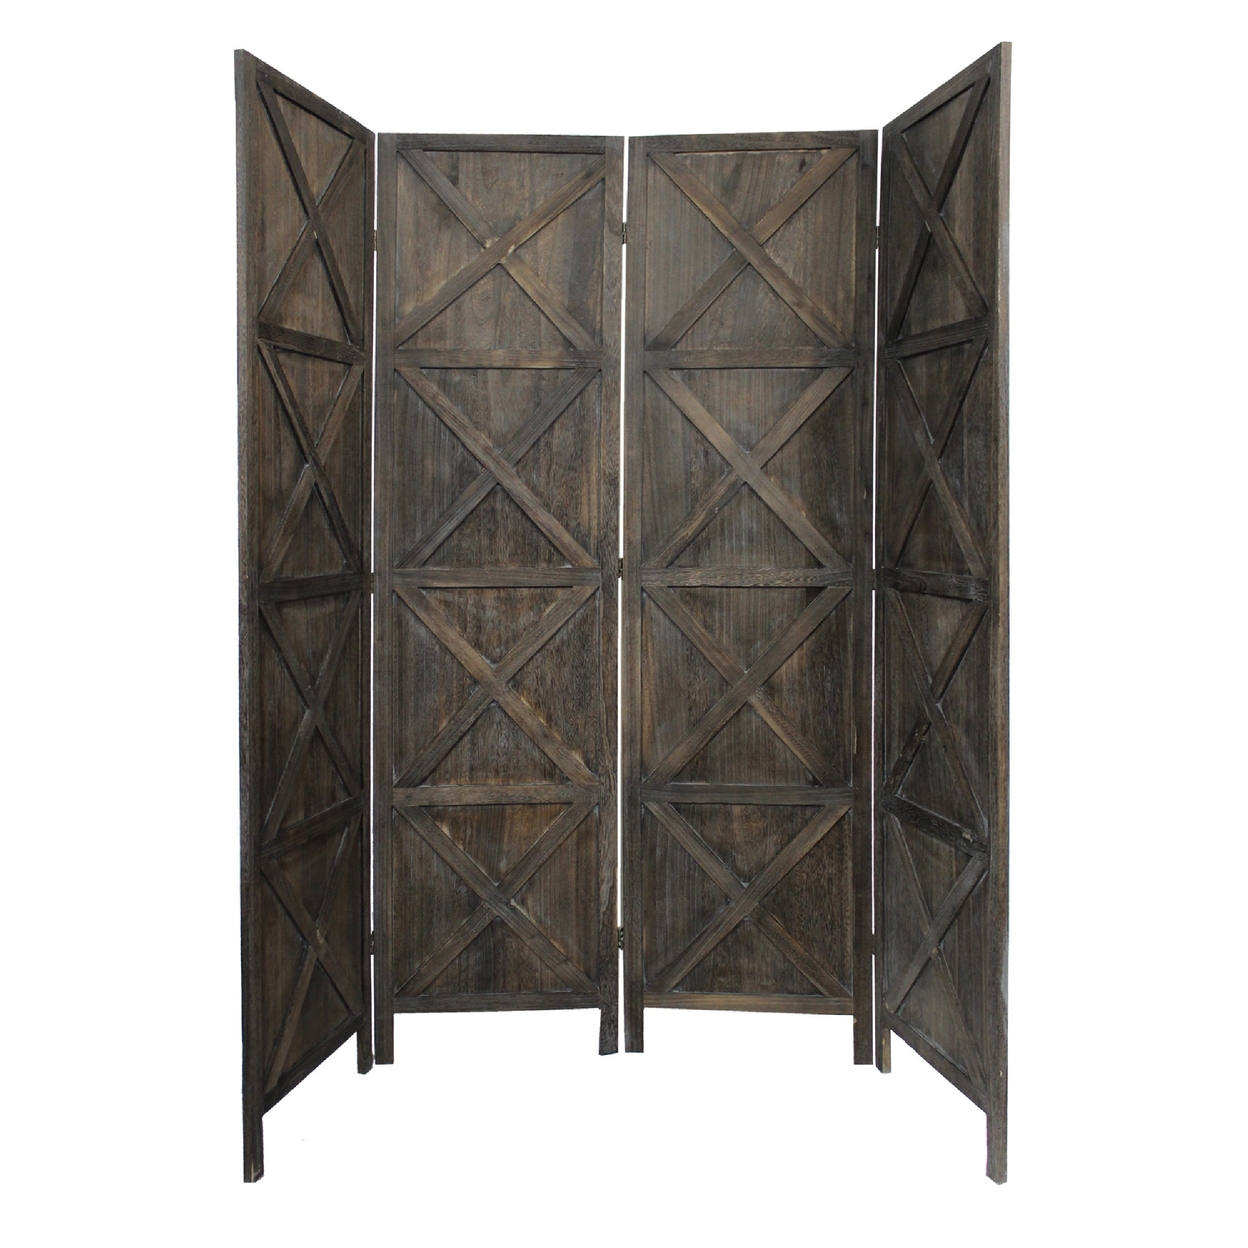 79 Inch Wood 4 Panel Screen Room Divider, Crossed Accents, Brown- Saltoro Sherpi